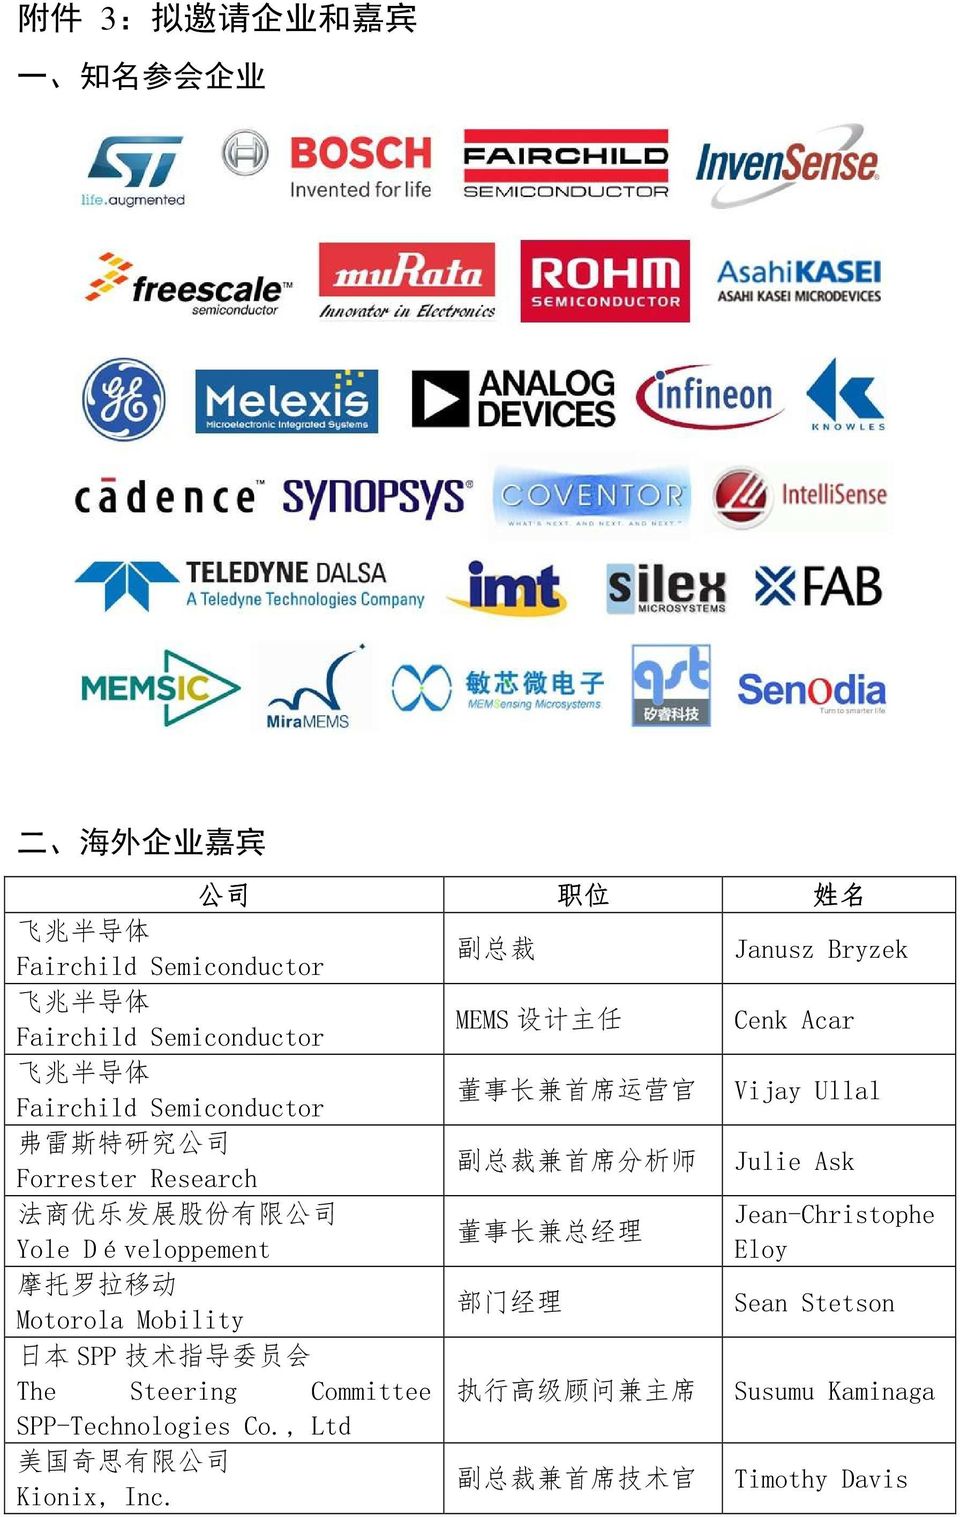 Steering Committee SPP-Technologies Co., Ltd 美 国 奇 思 有 限 公 司 Kionix, Inc.